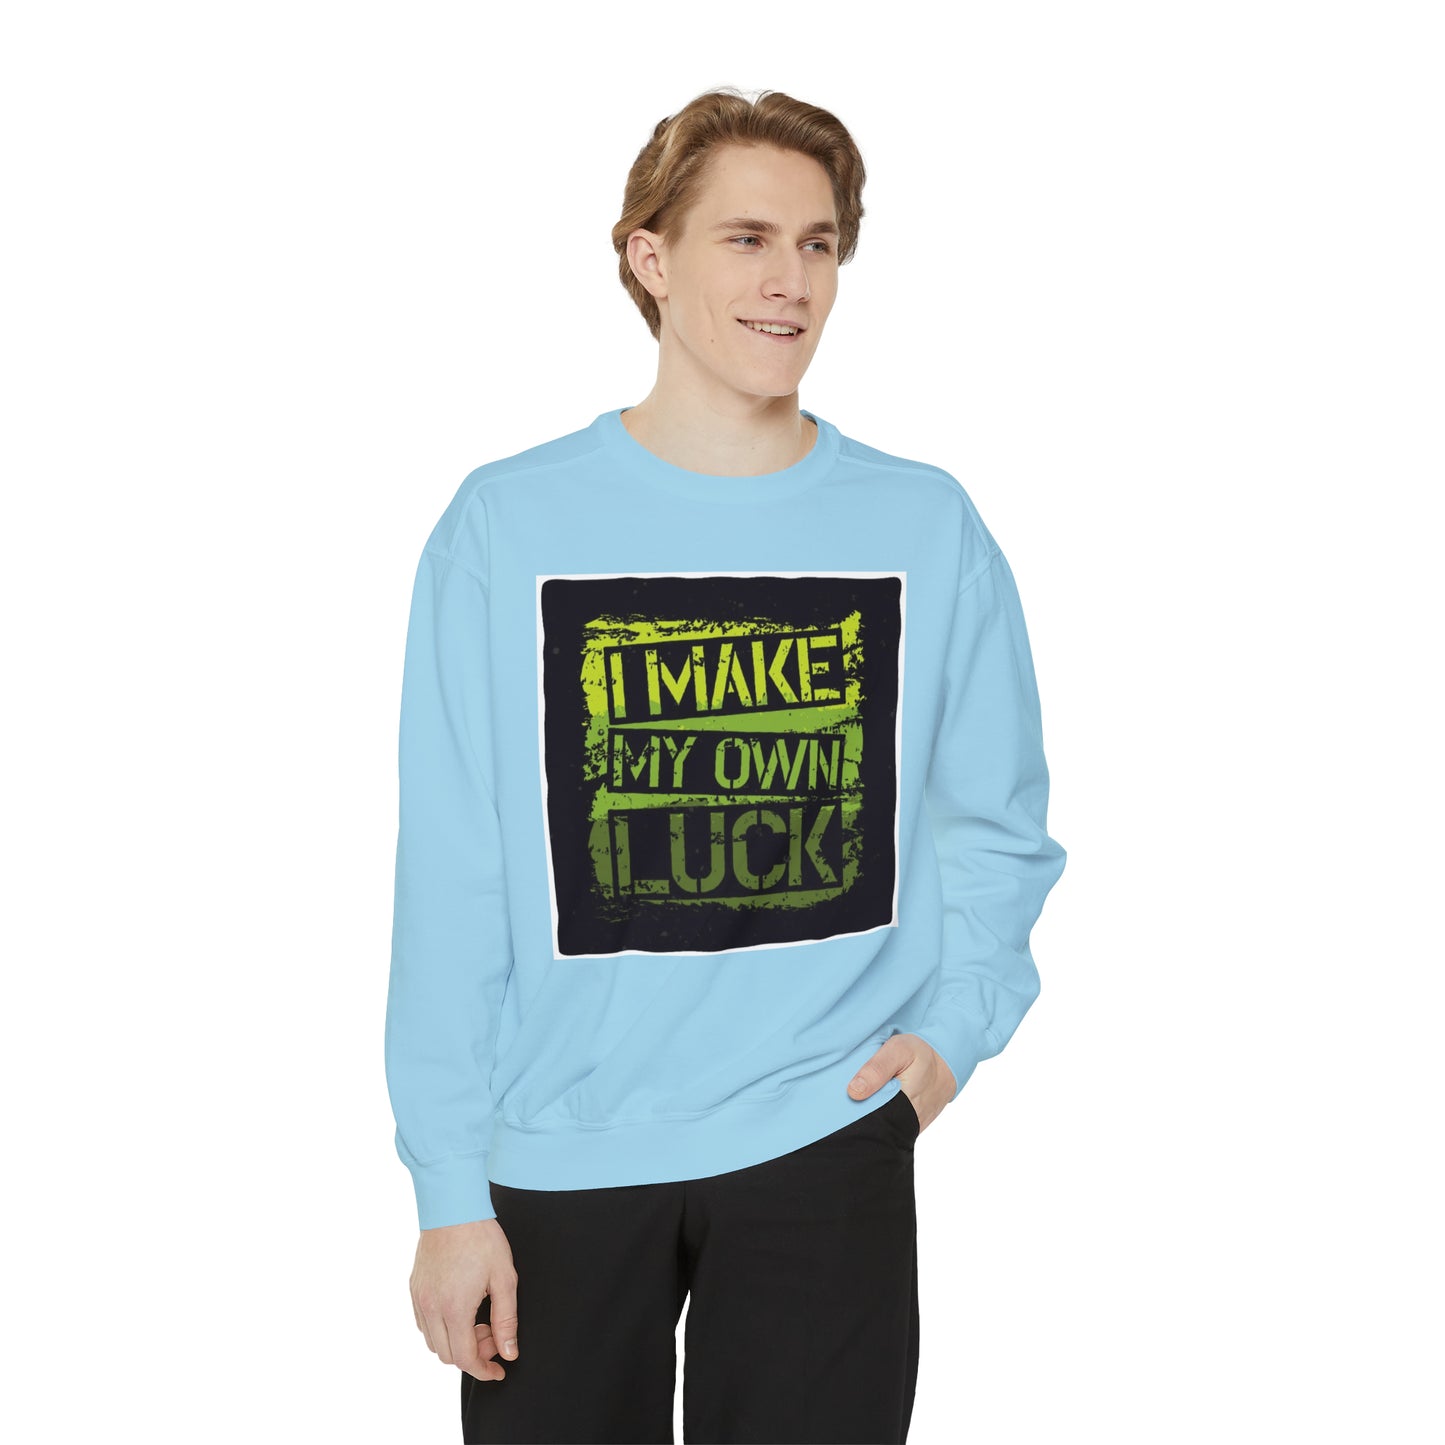 Copy of Copy of Copy of Unisex Garment-Dyed Sweatshirt